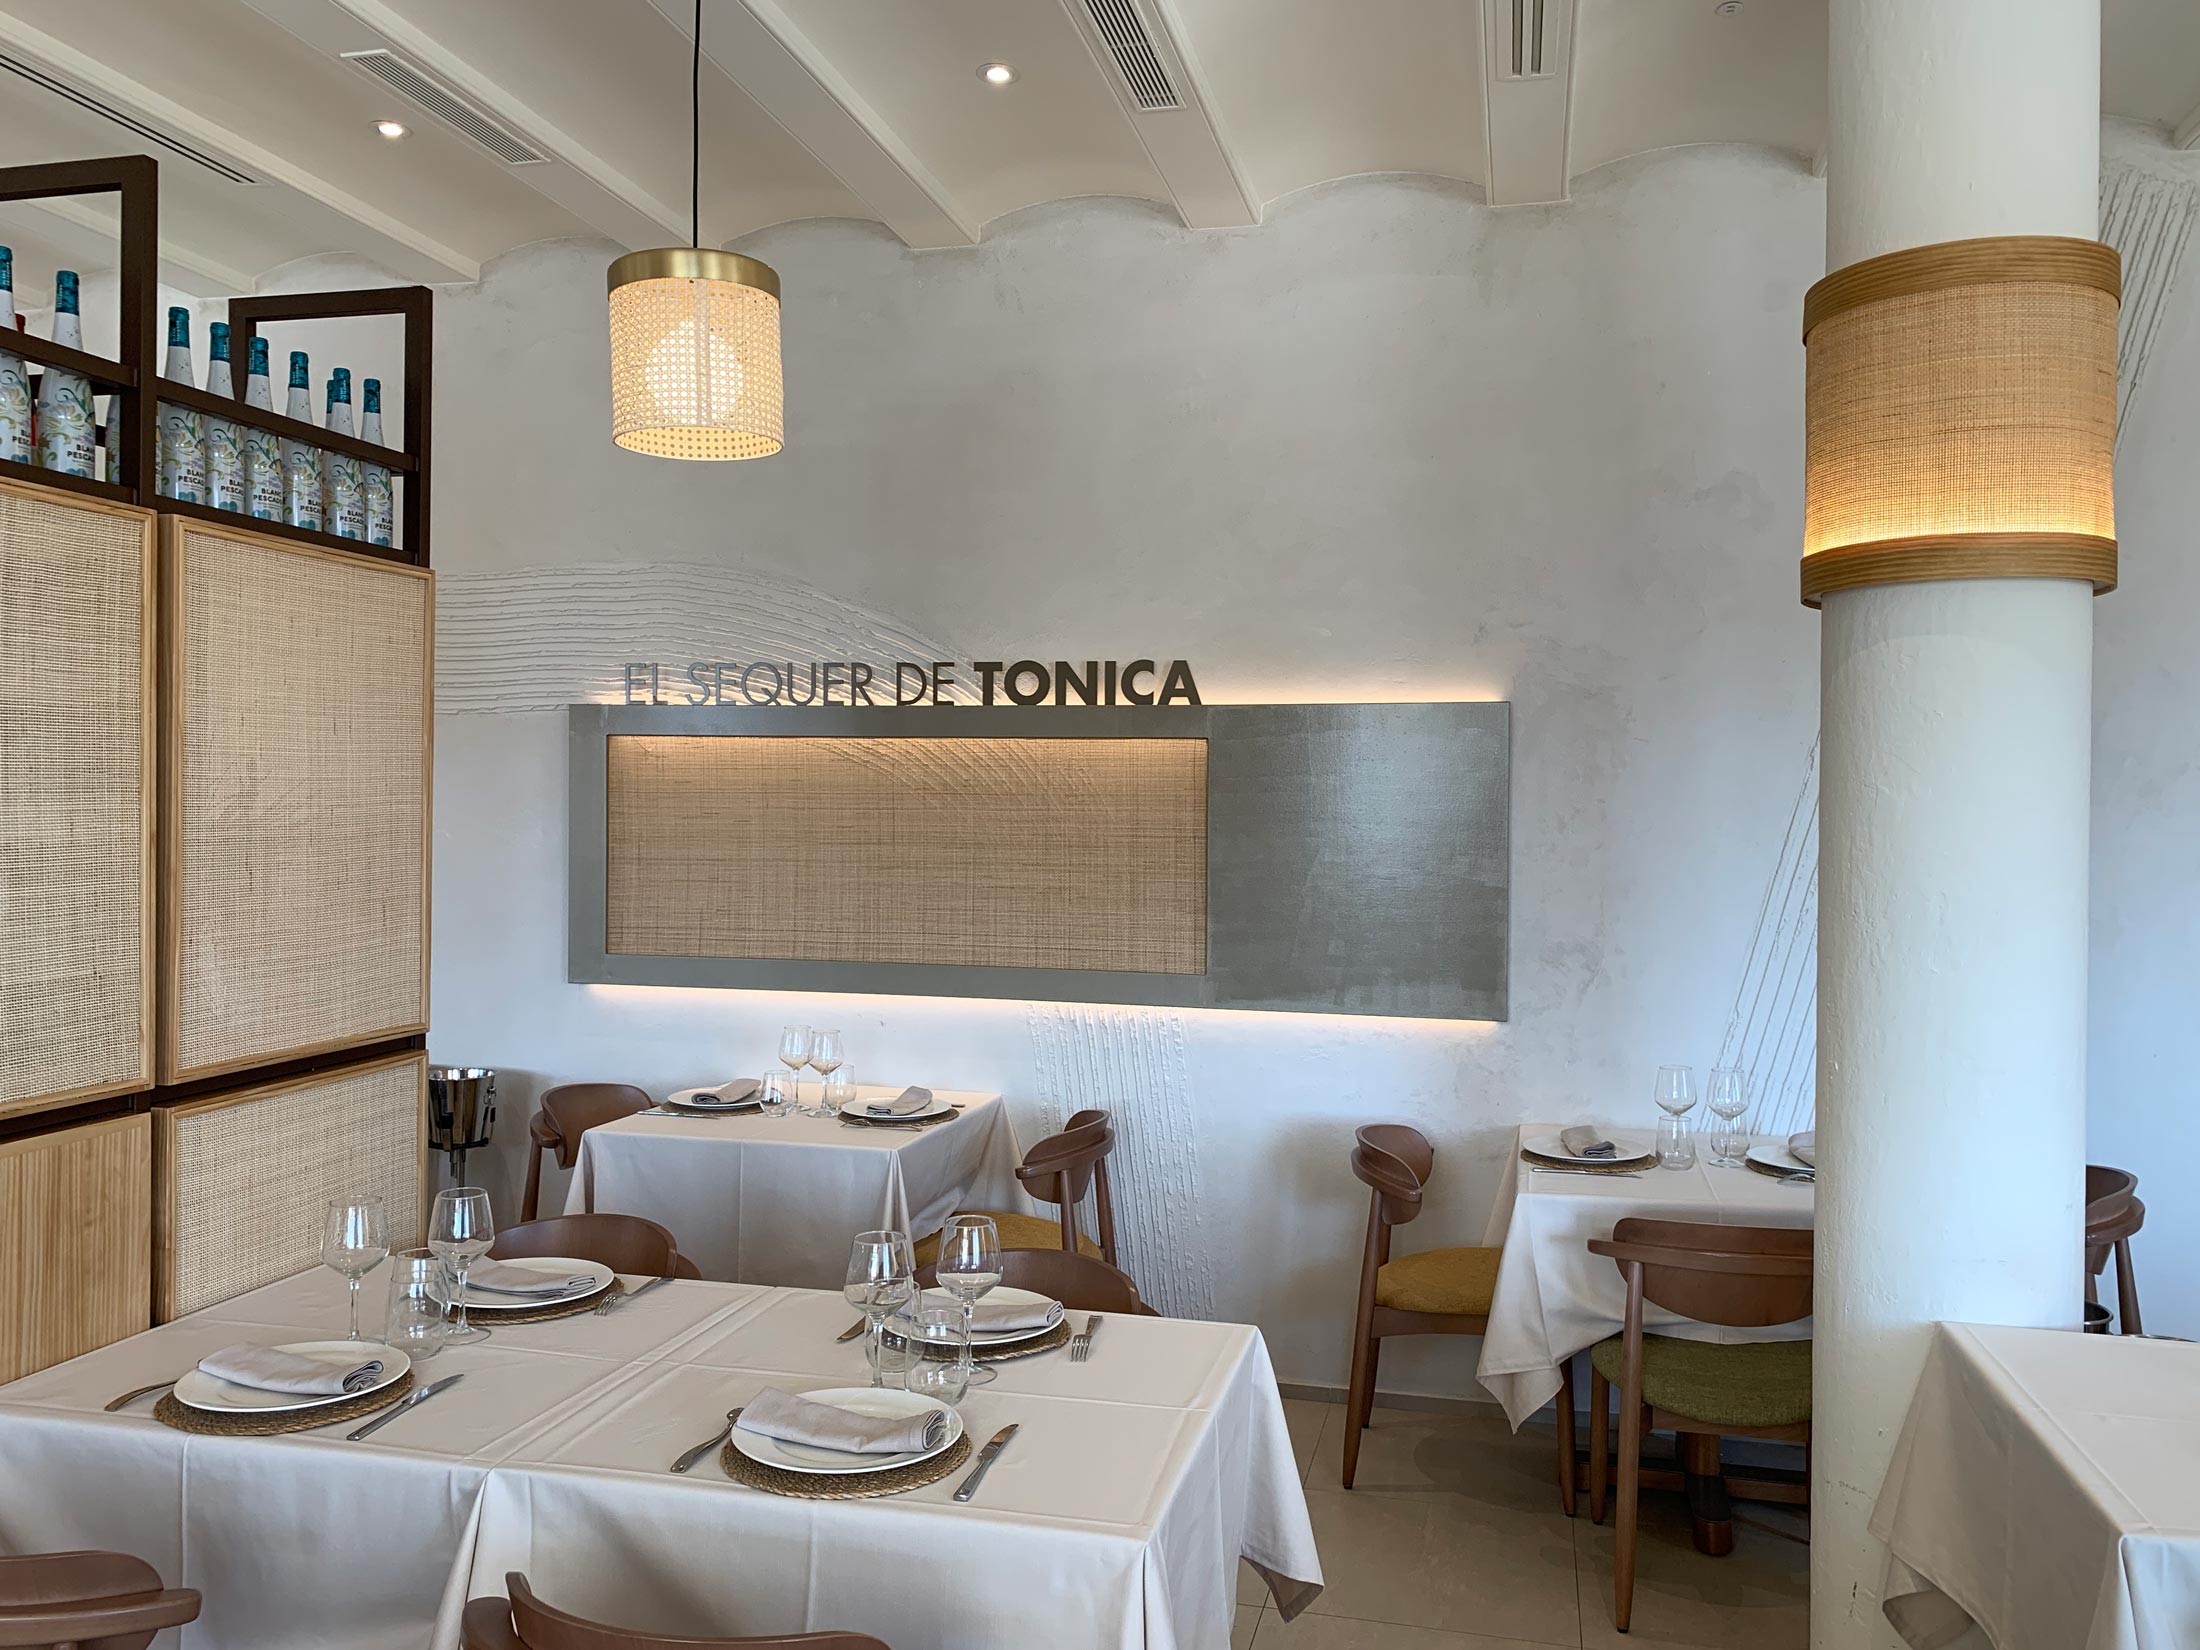 Foto-Restaurante el Sequer de Tonica